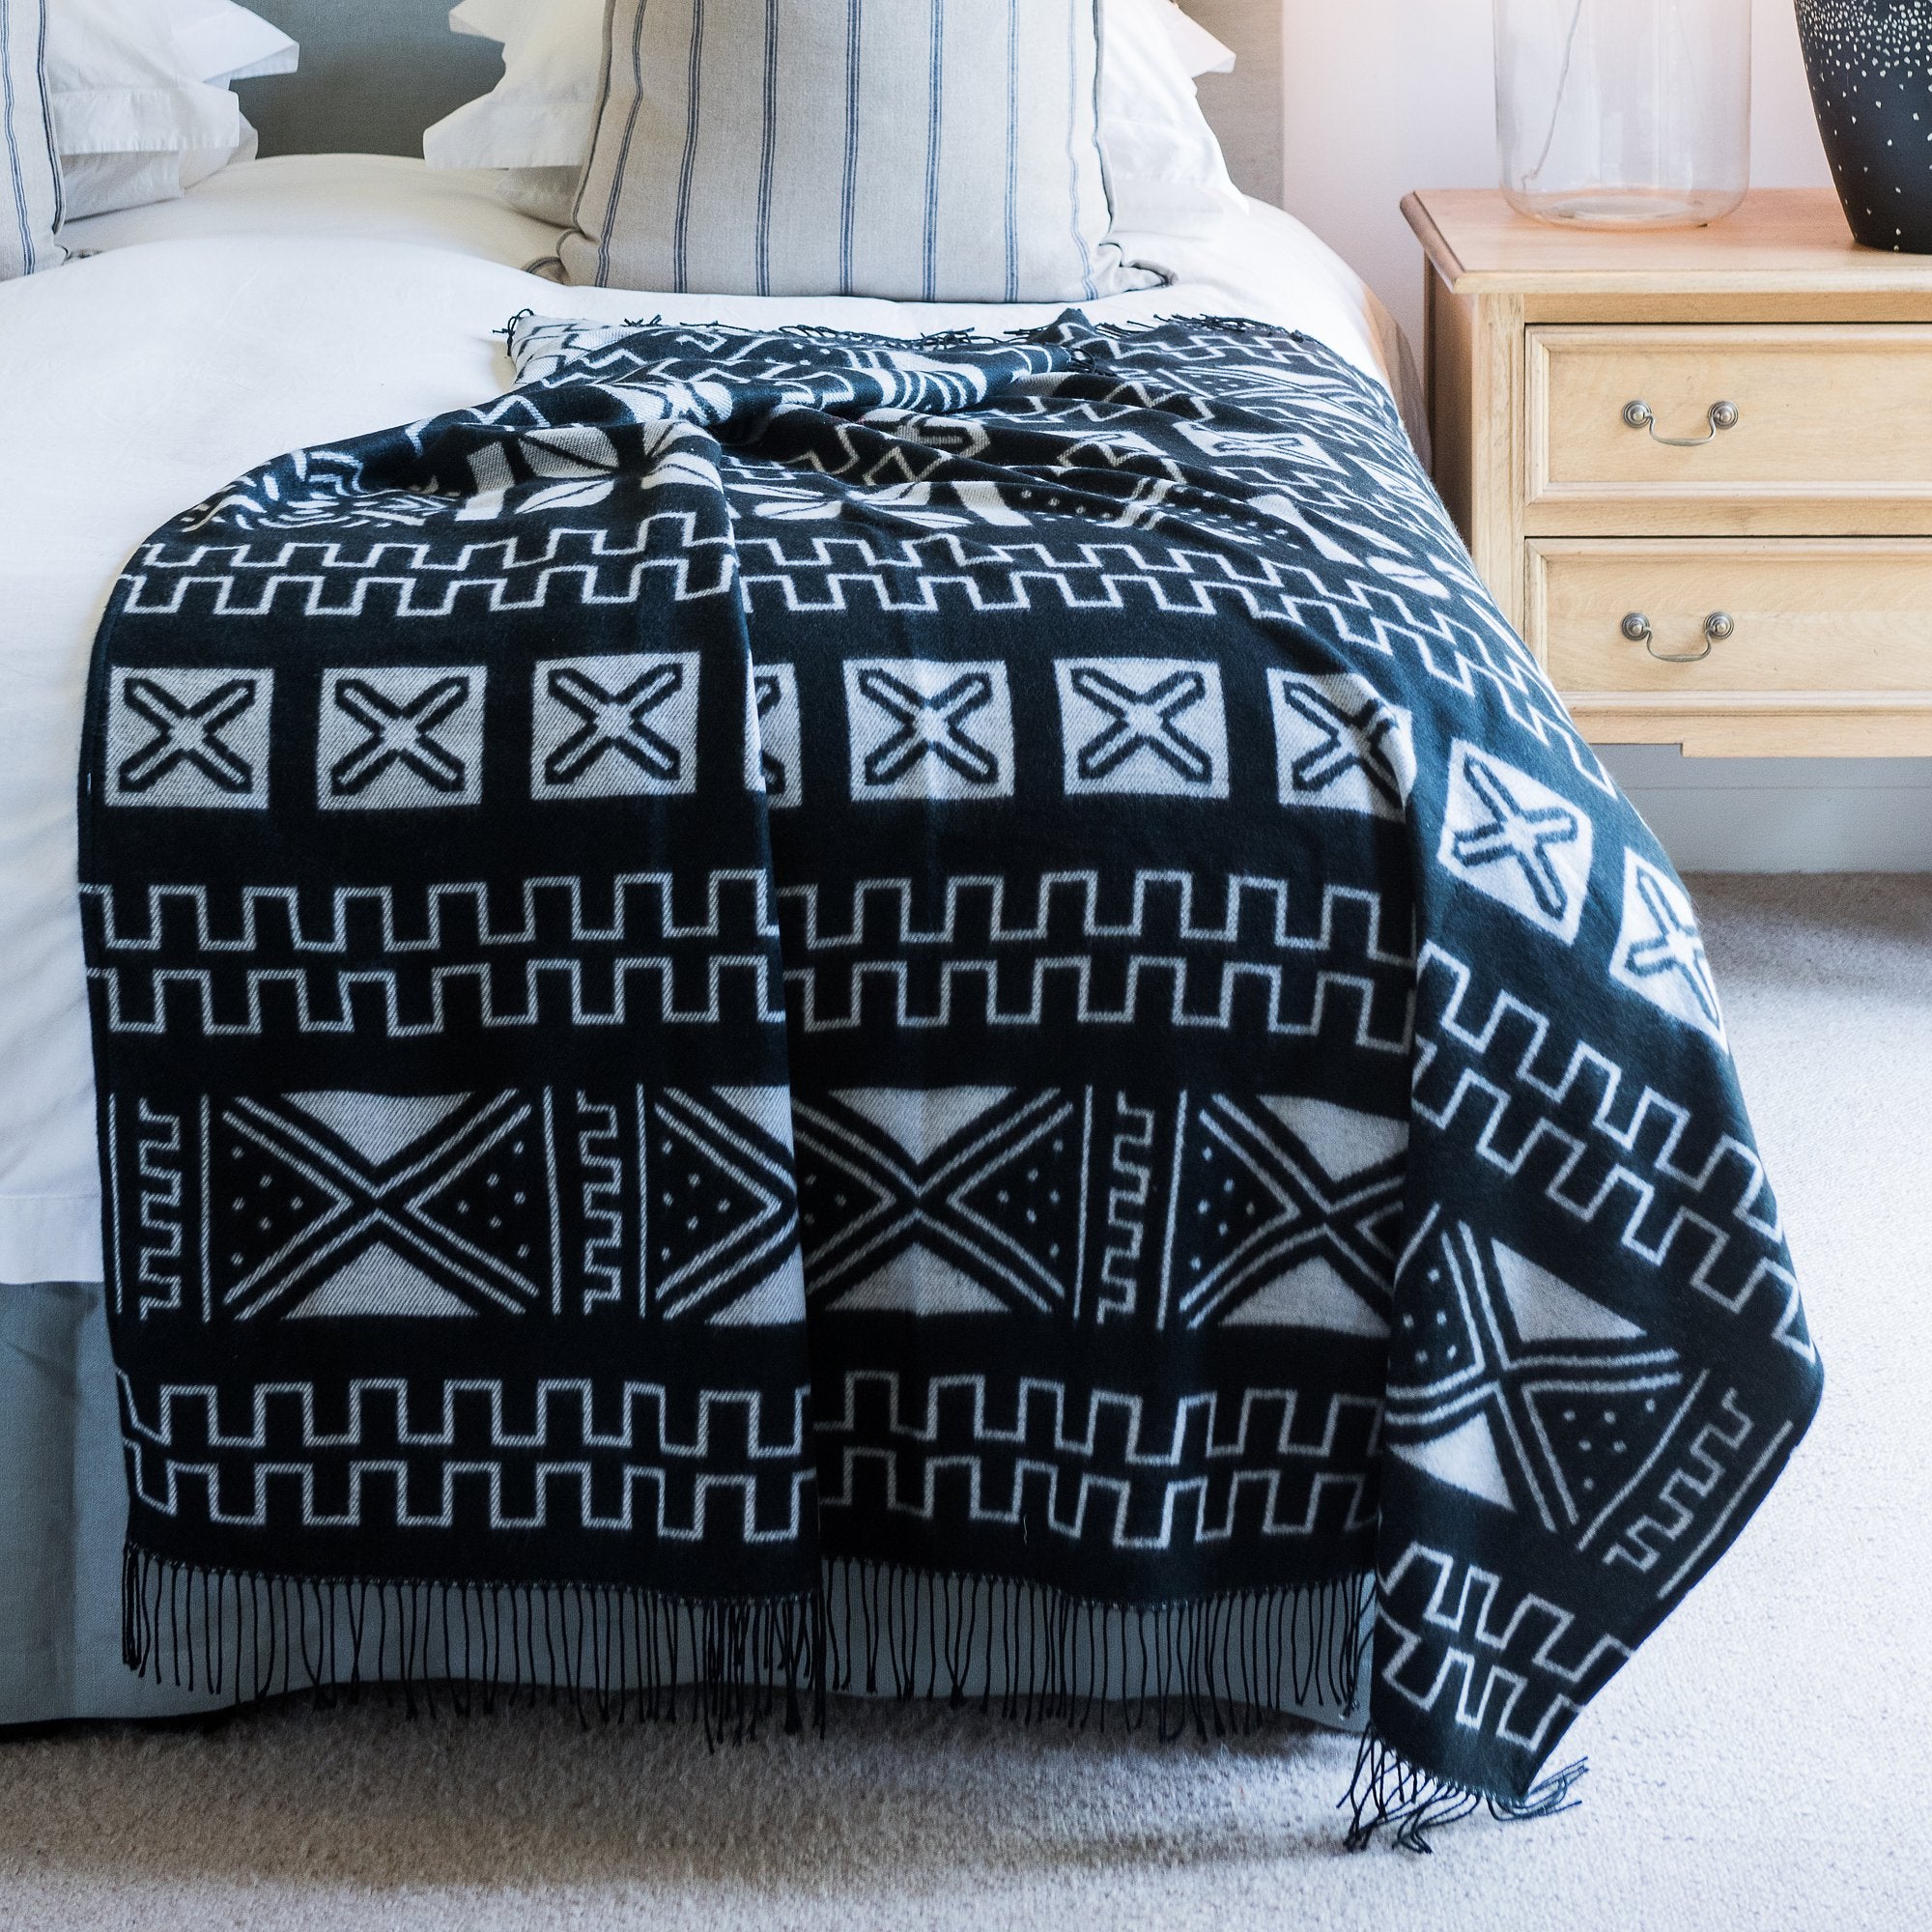 Cozy African pattern blanket - Mali - 180 x 130 cm